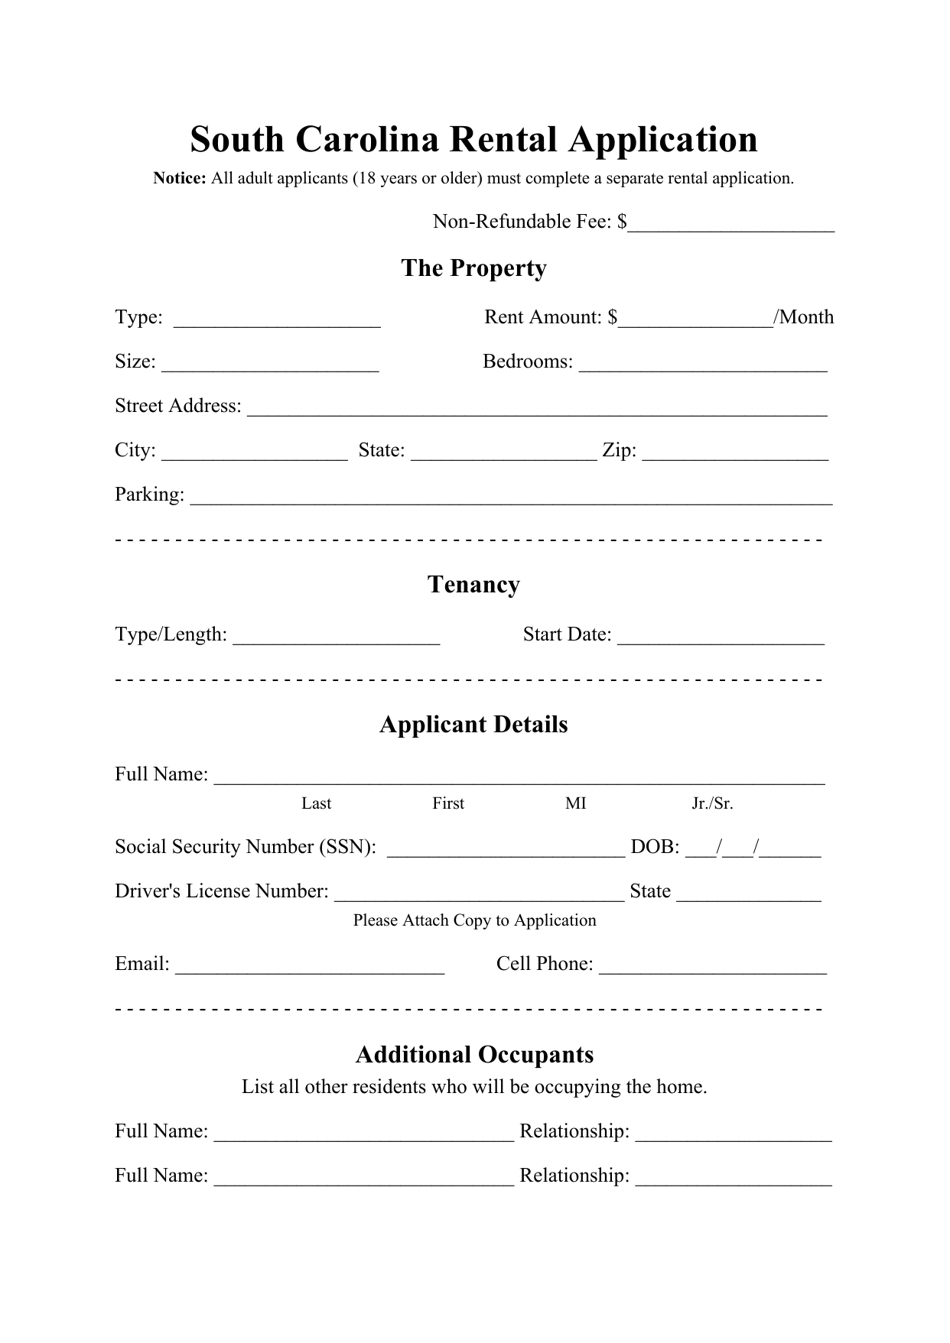 Rental Application Form - South Carolina, Page 1